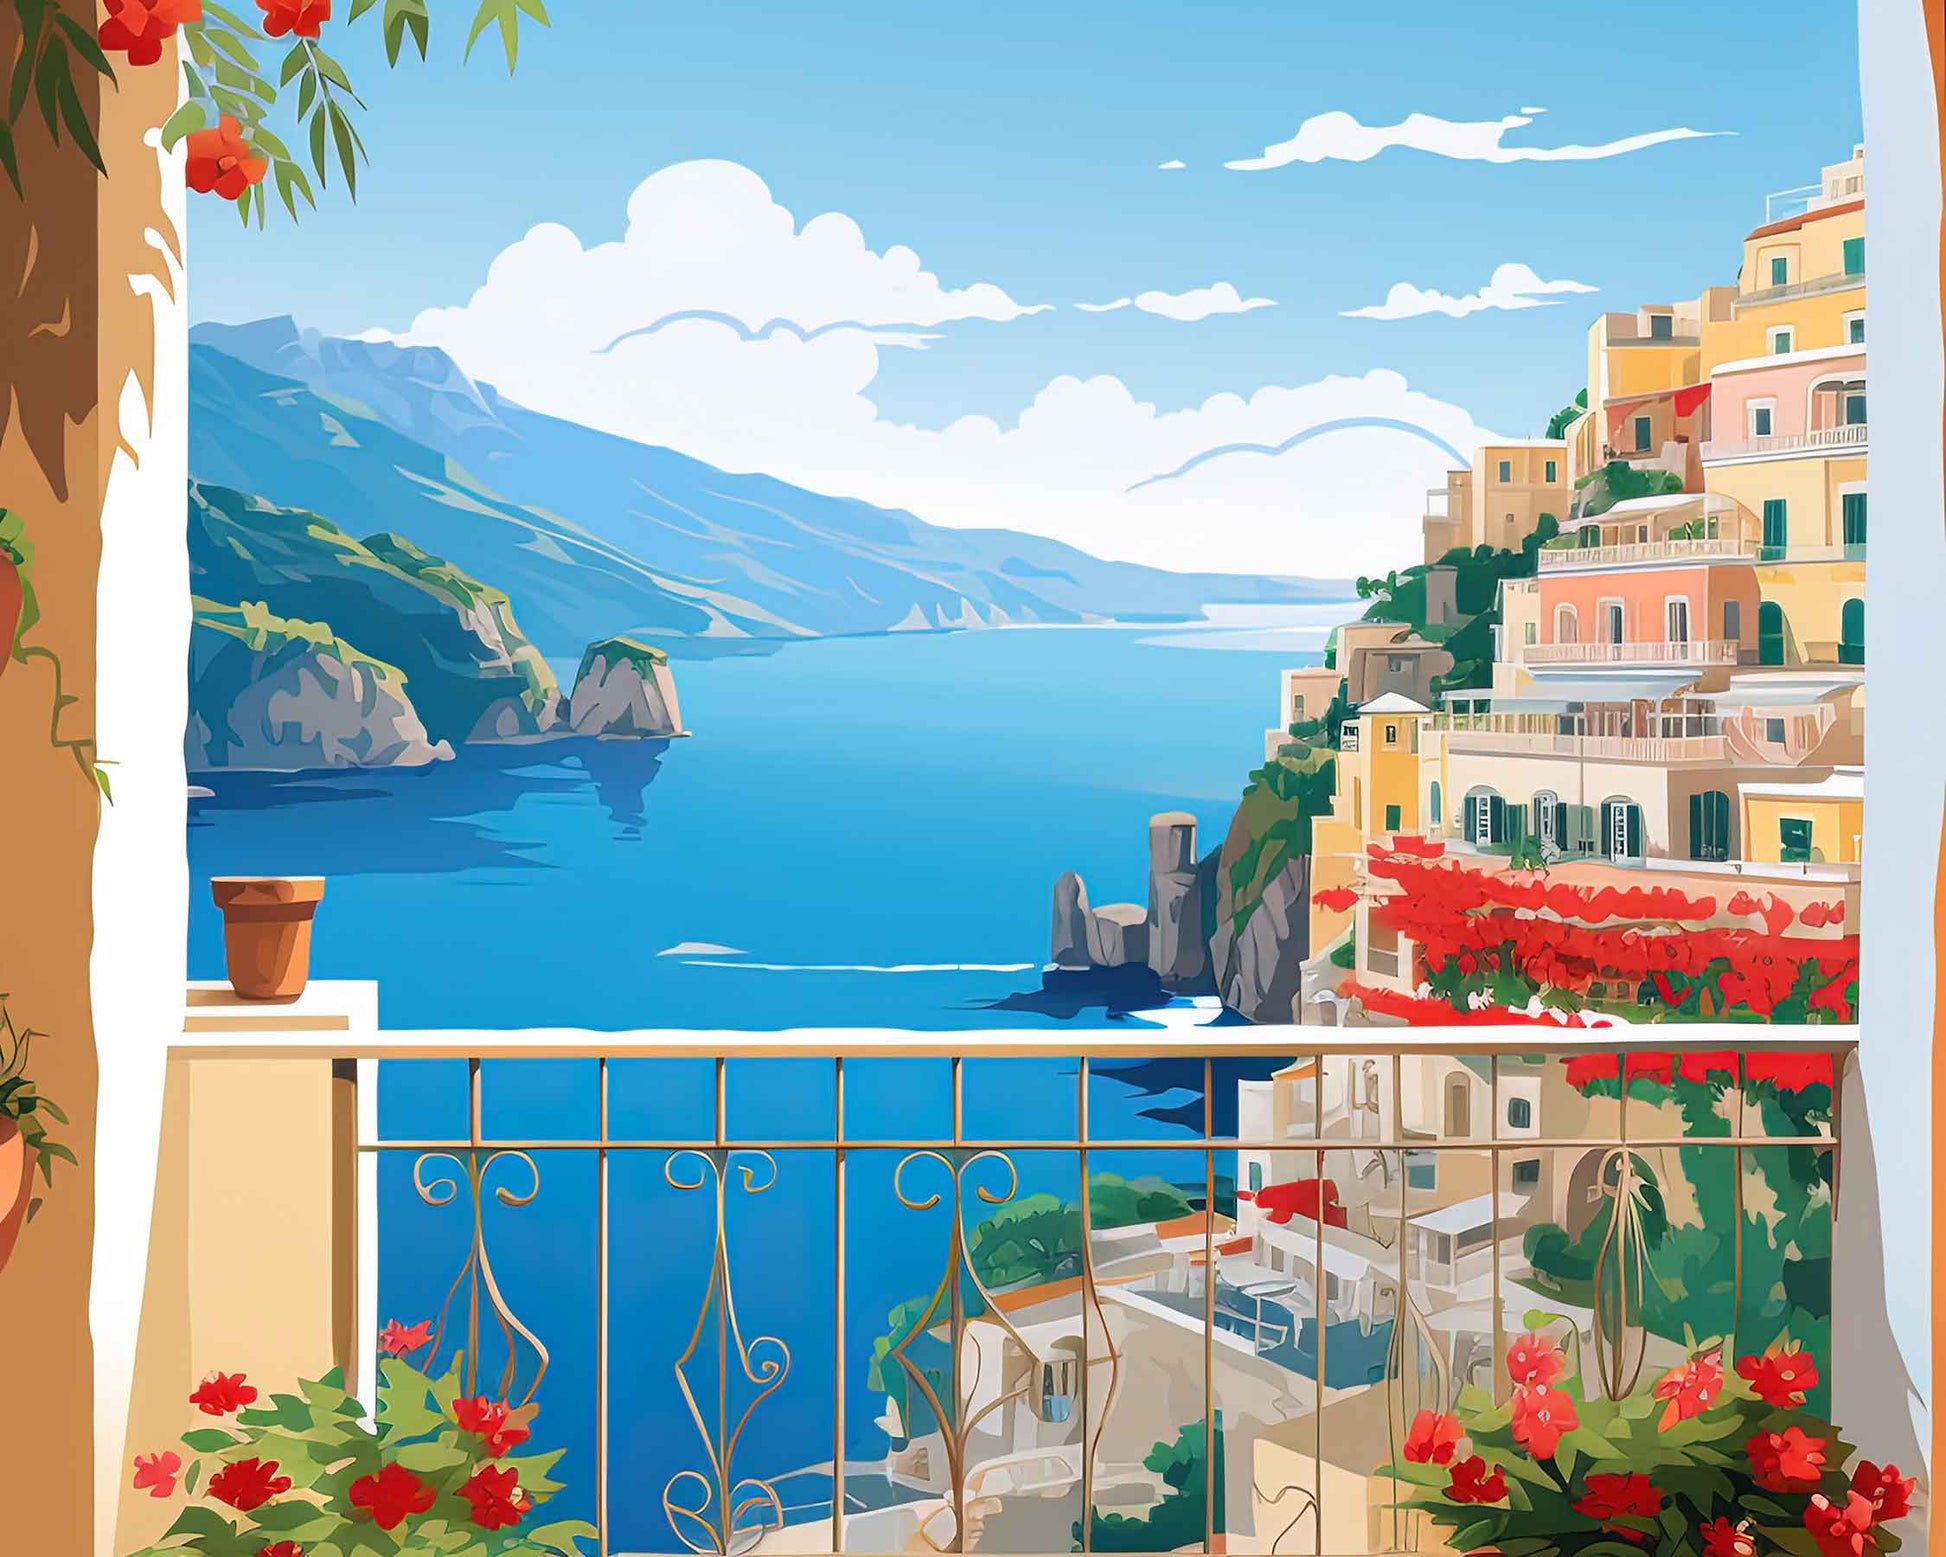 Framed Image of Positano Italy Travel Poster Illustration Prints Wall Art